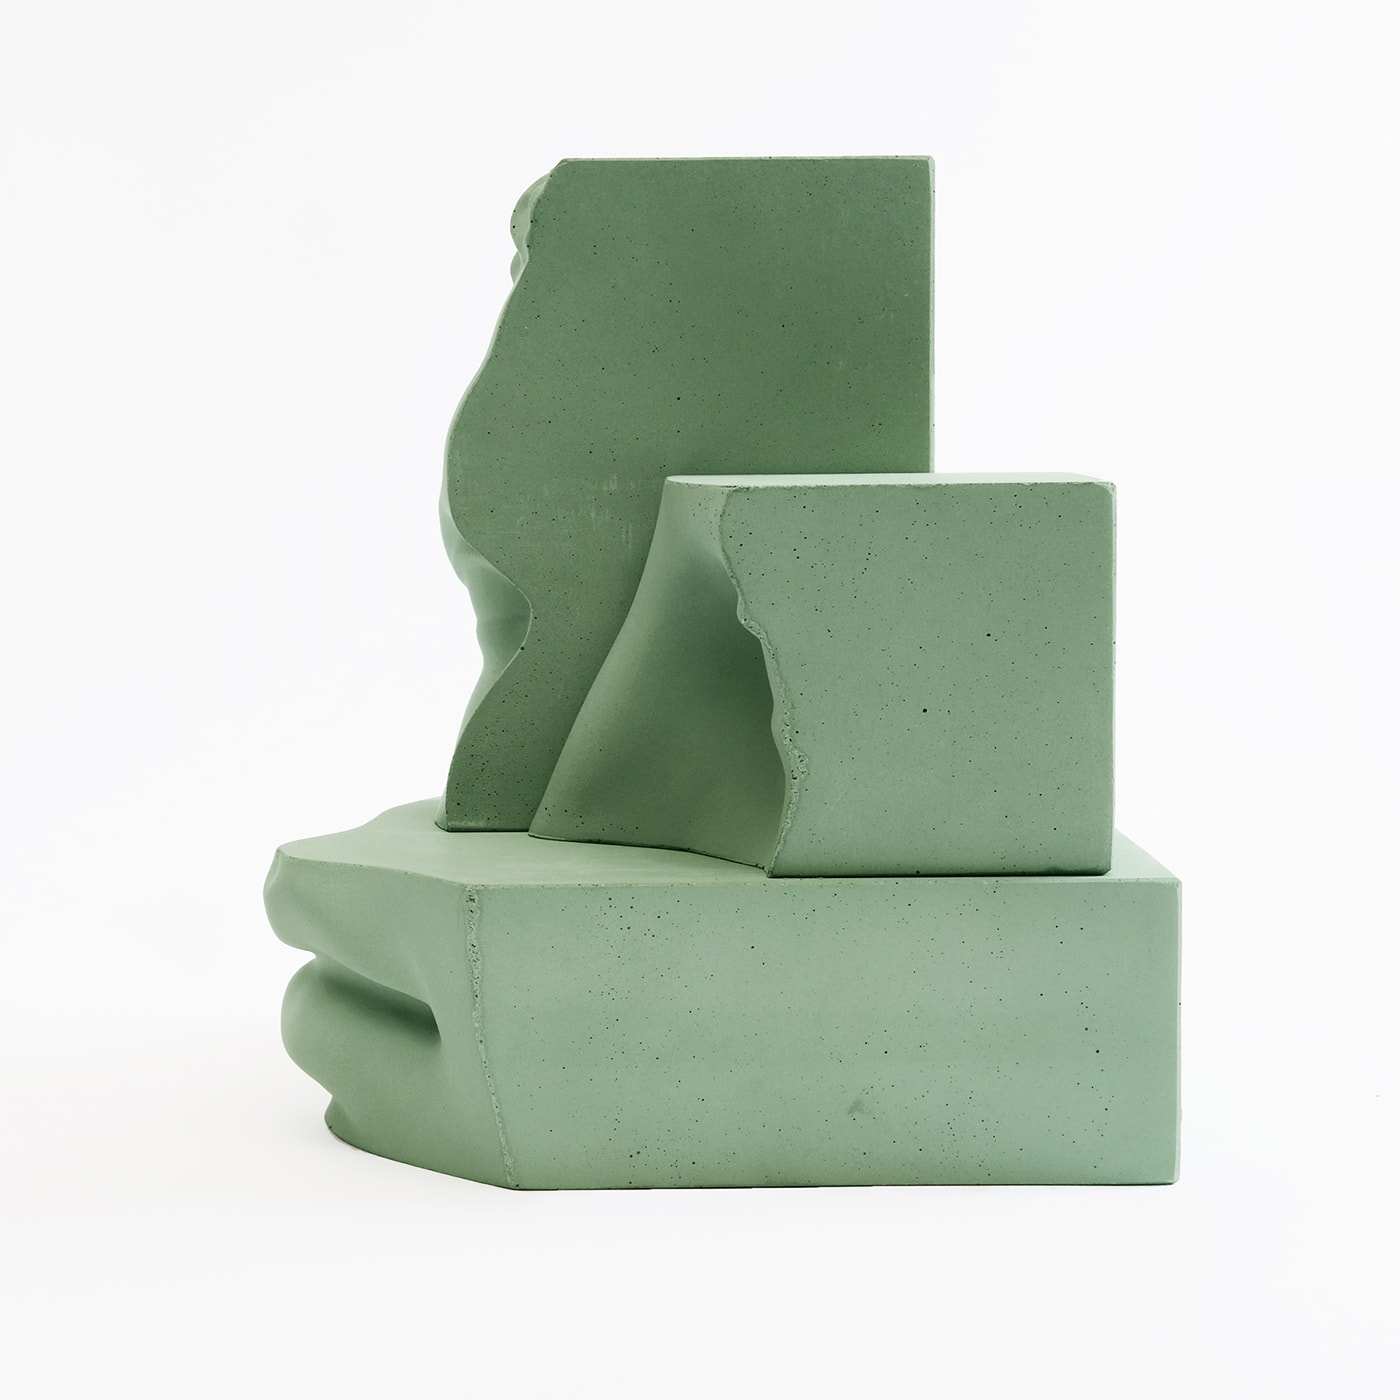 Green Hermes Sculpture - Paolo Giordano